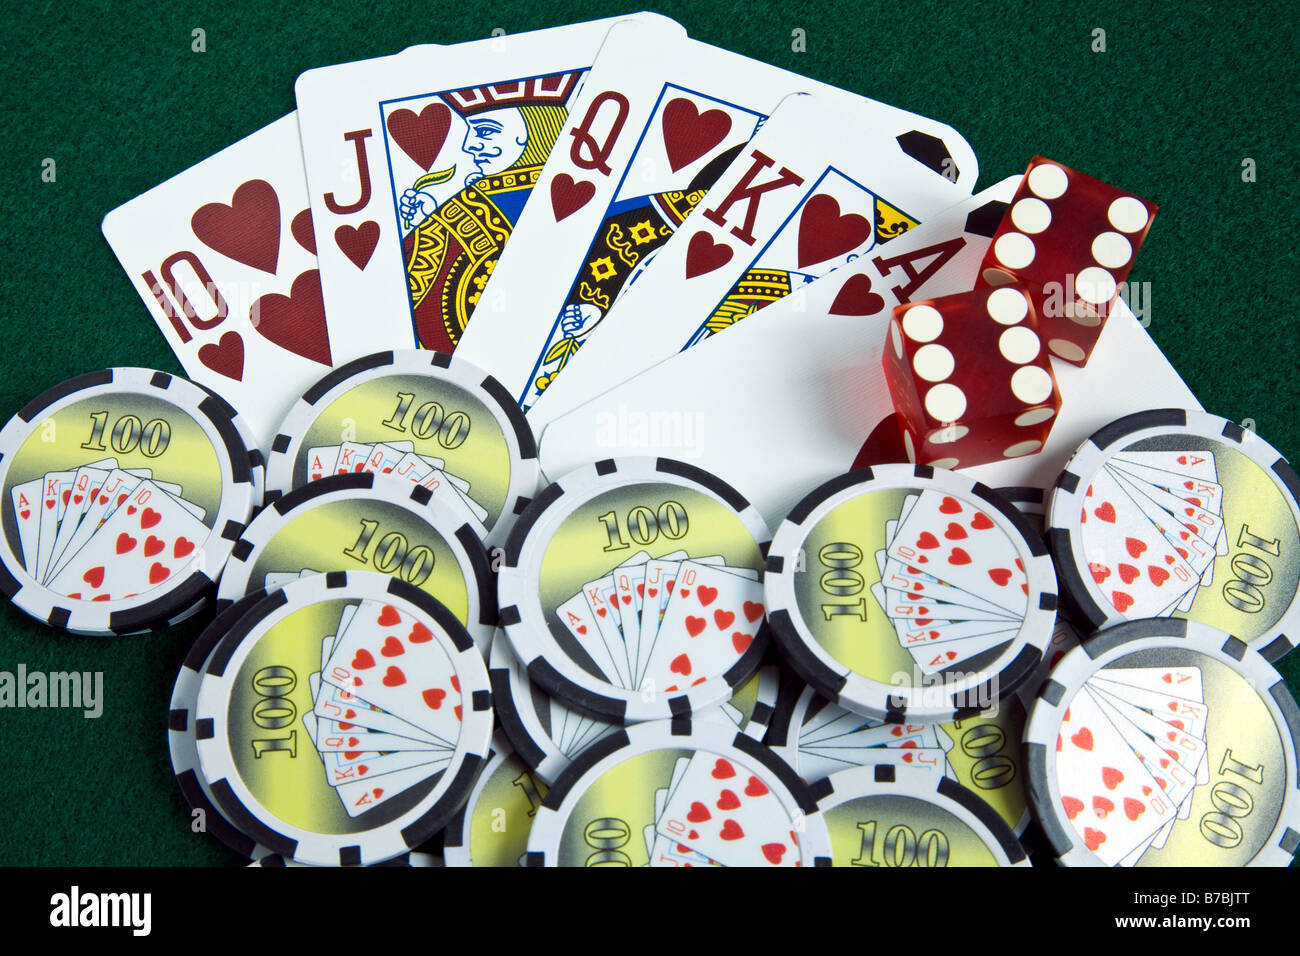 Rio Casino Las Vegas $1 Poker Chip 